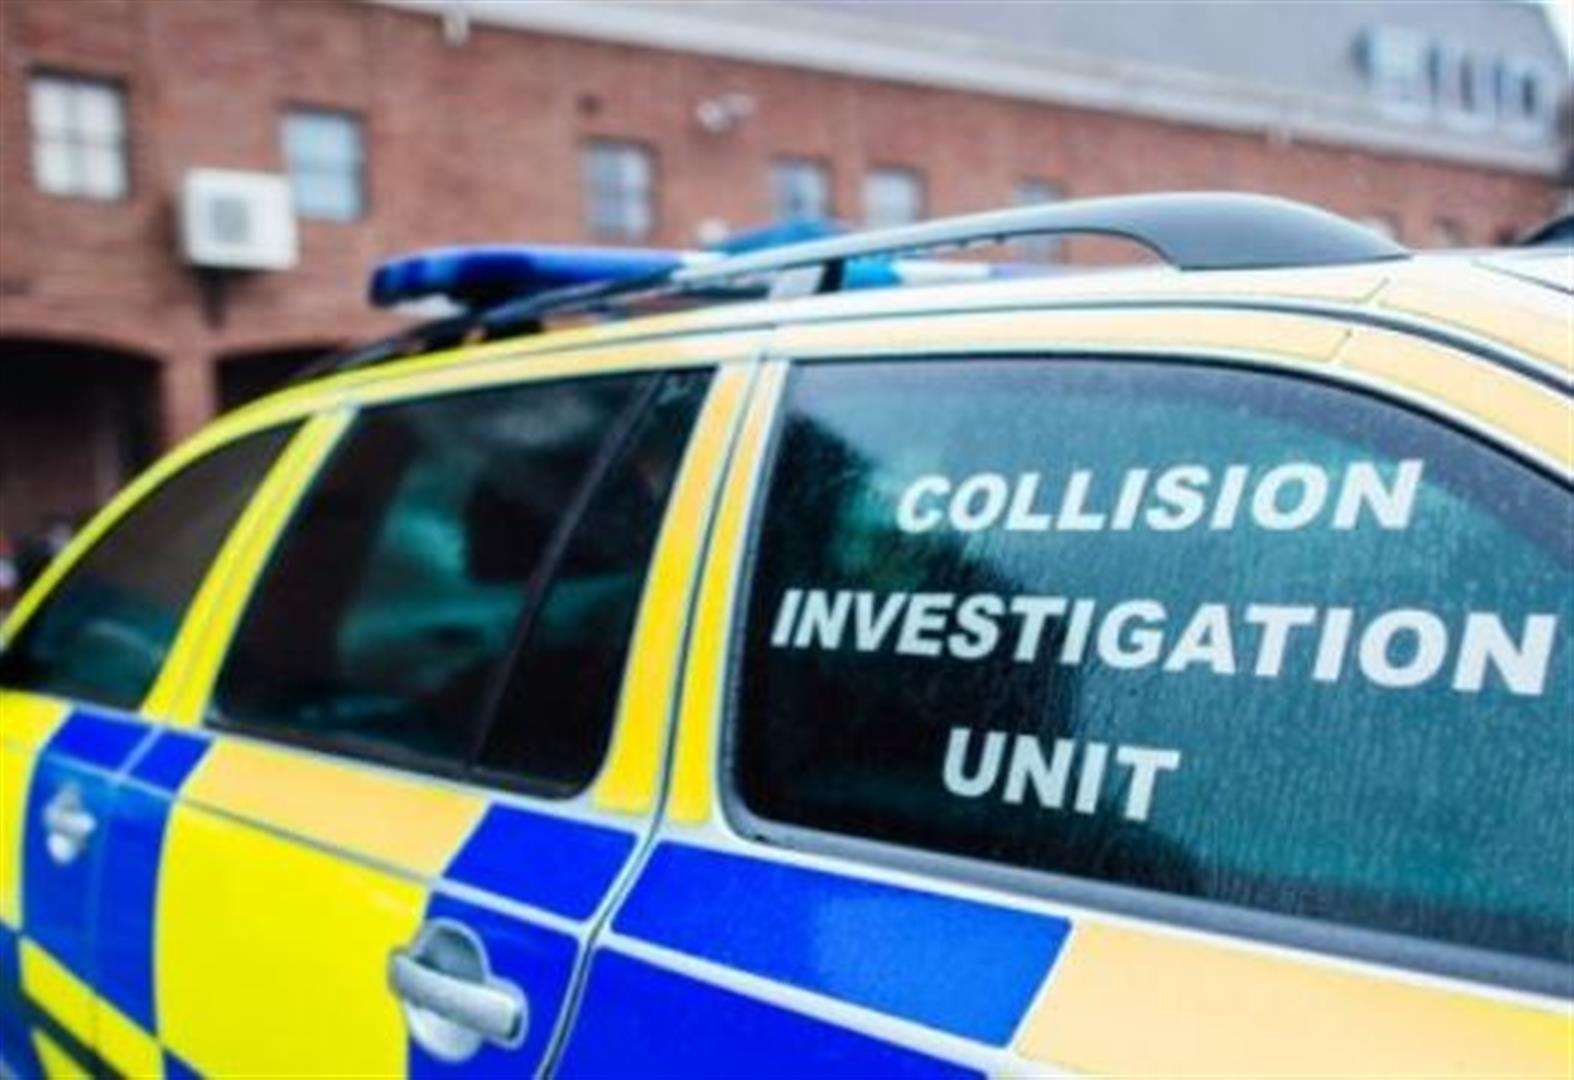 Kent Police collision investigation unit - Stock Image (1468666)